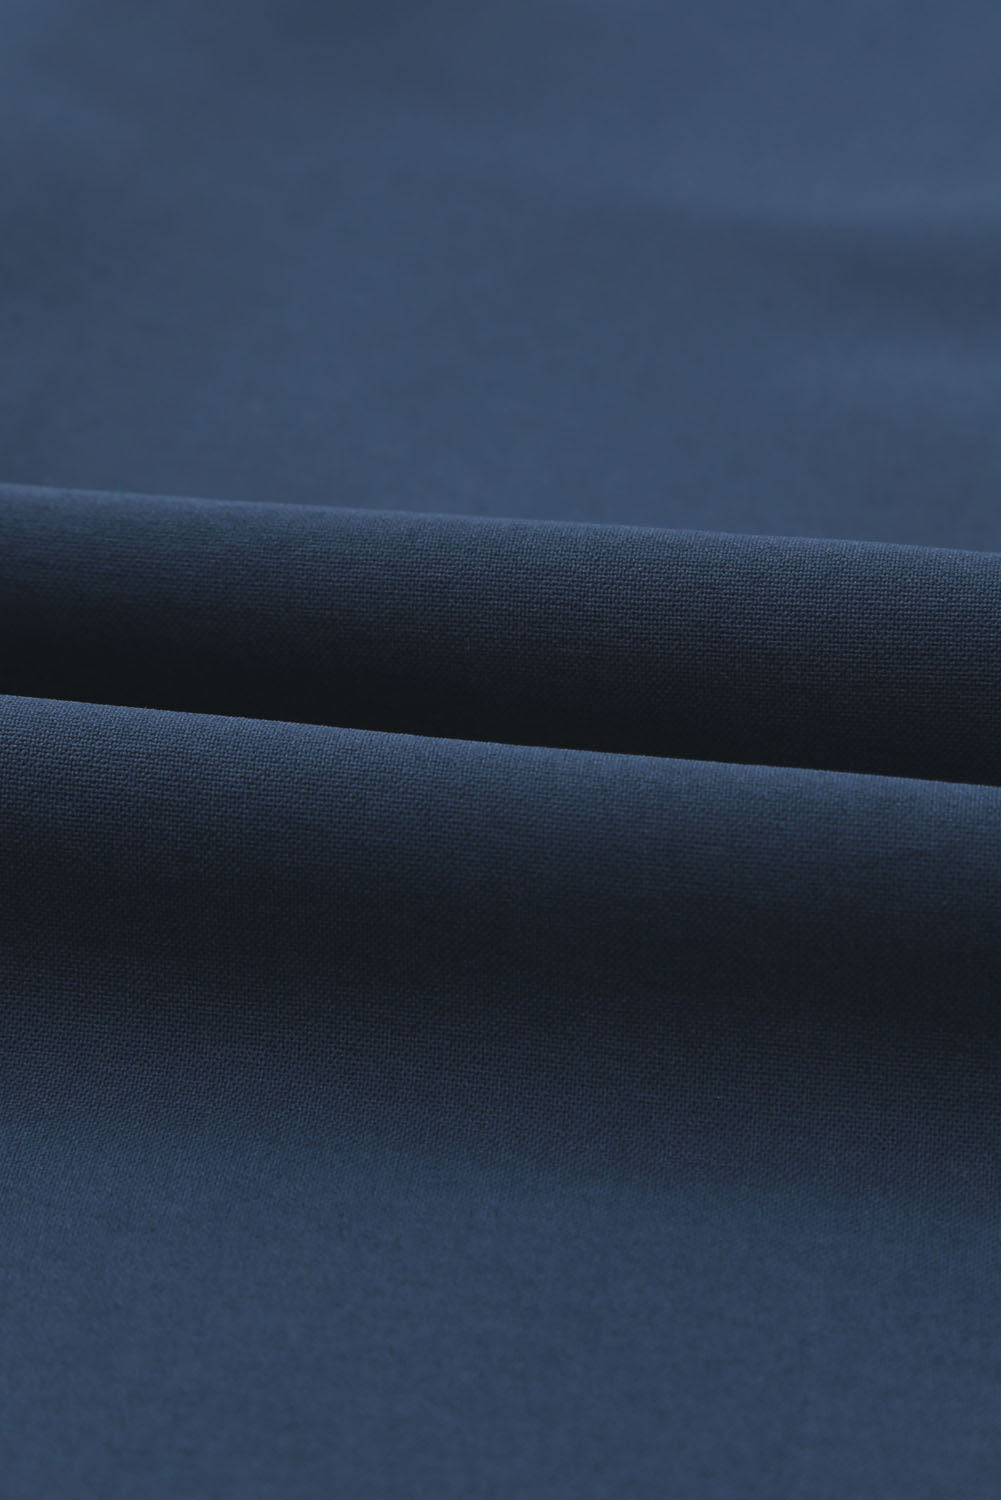 Blue Ruffle Sleeve Smocked Bodice Wide Leg Jumpsuit for Women LC643773-5